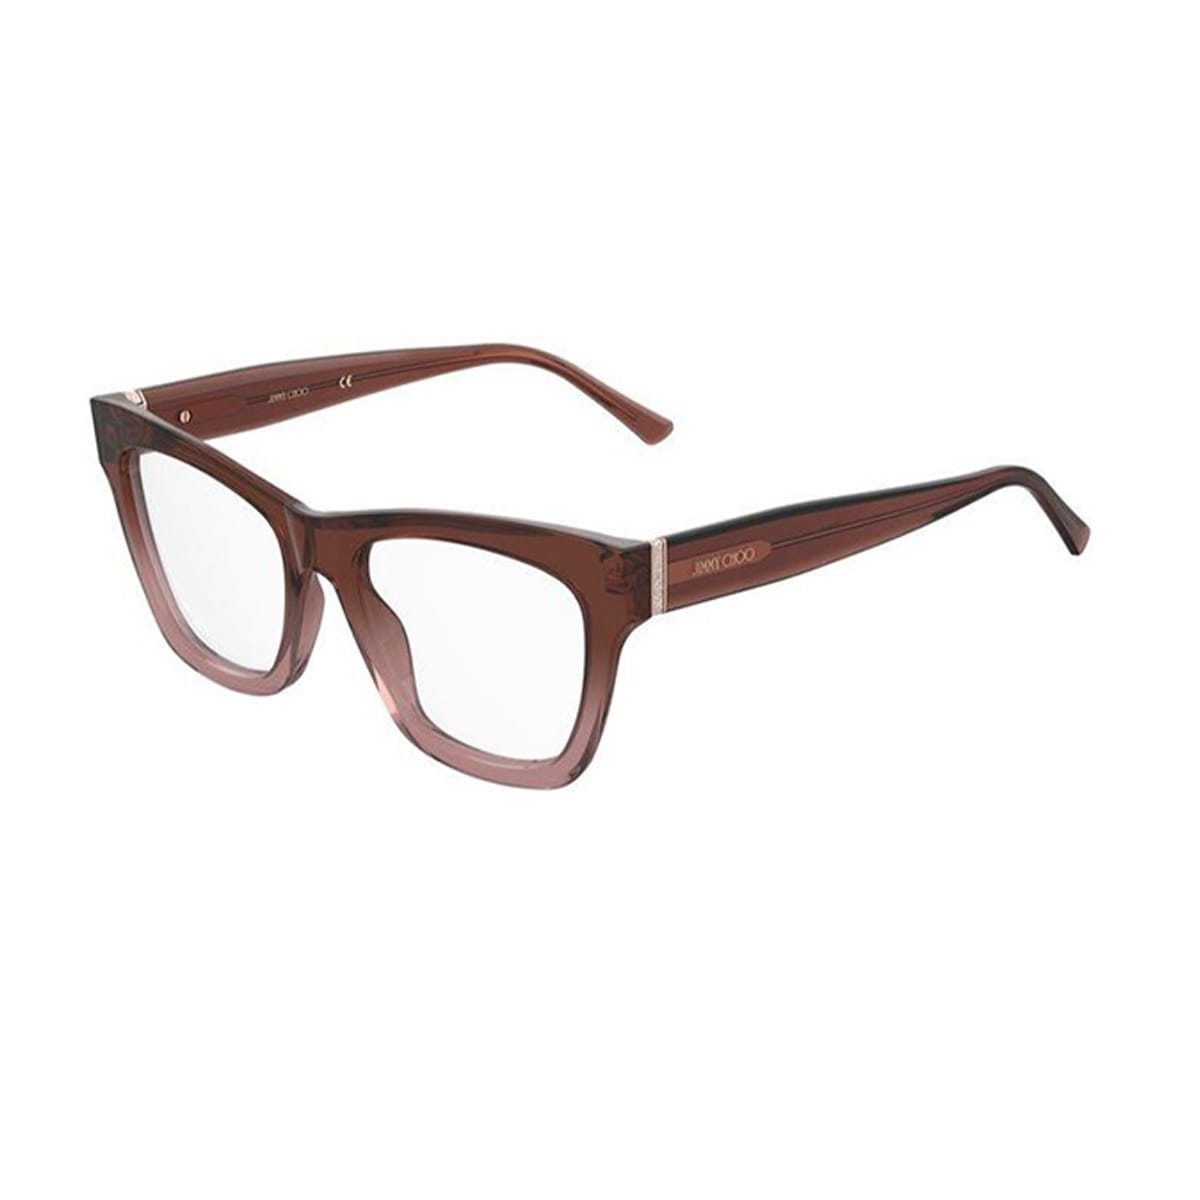 Jimmy Choo Eyewear Jc351 2ln/18 Glasses